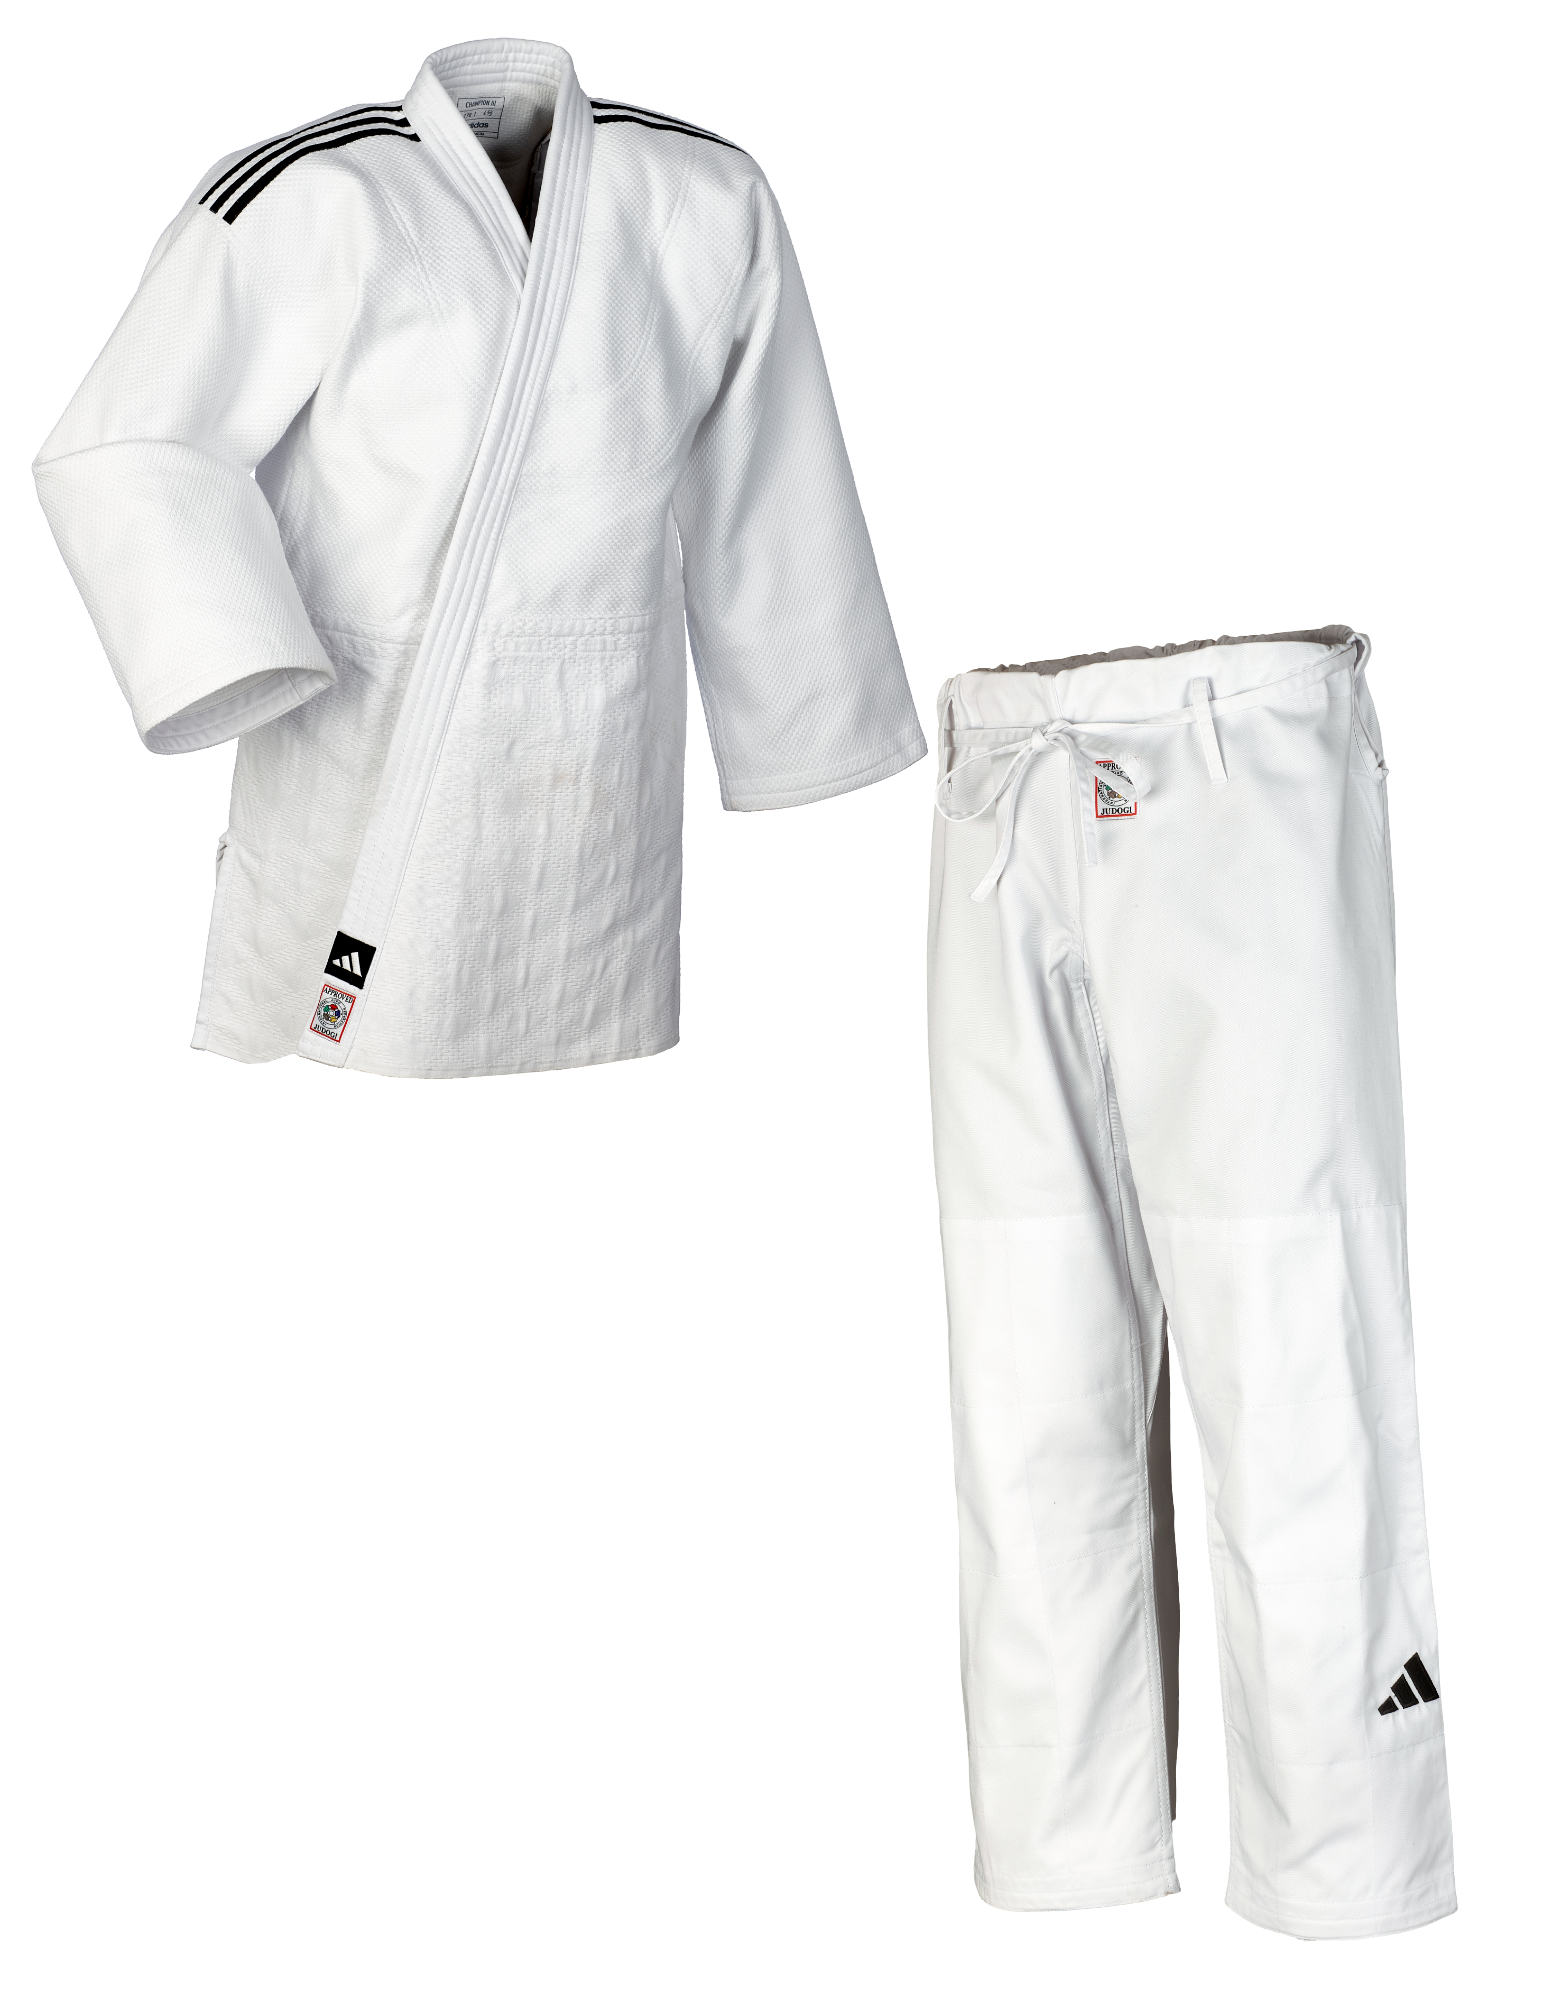 adidas judo gi Champion III JIJF-2 white / black stripes